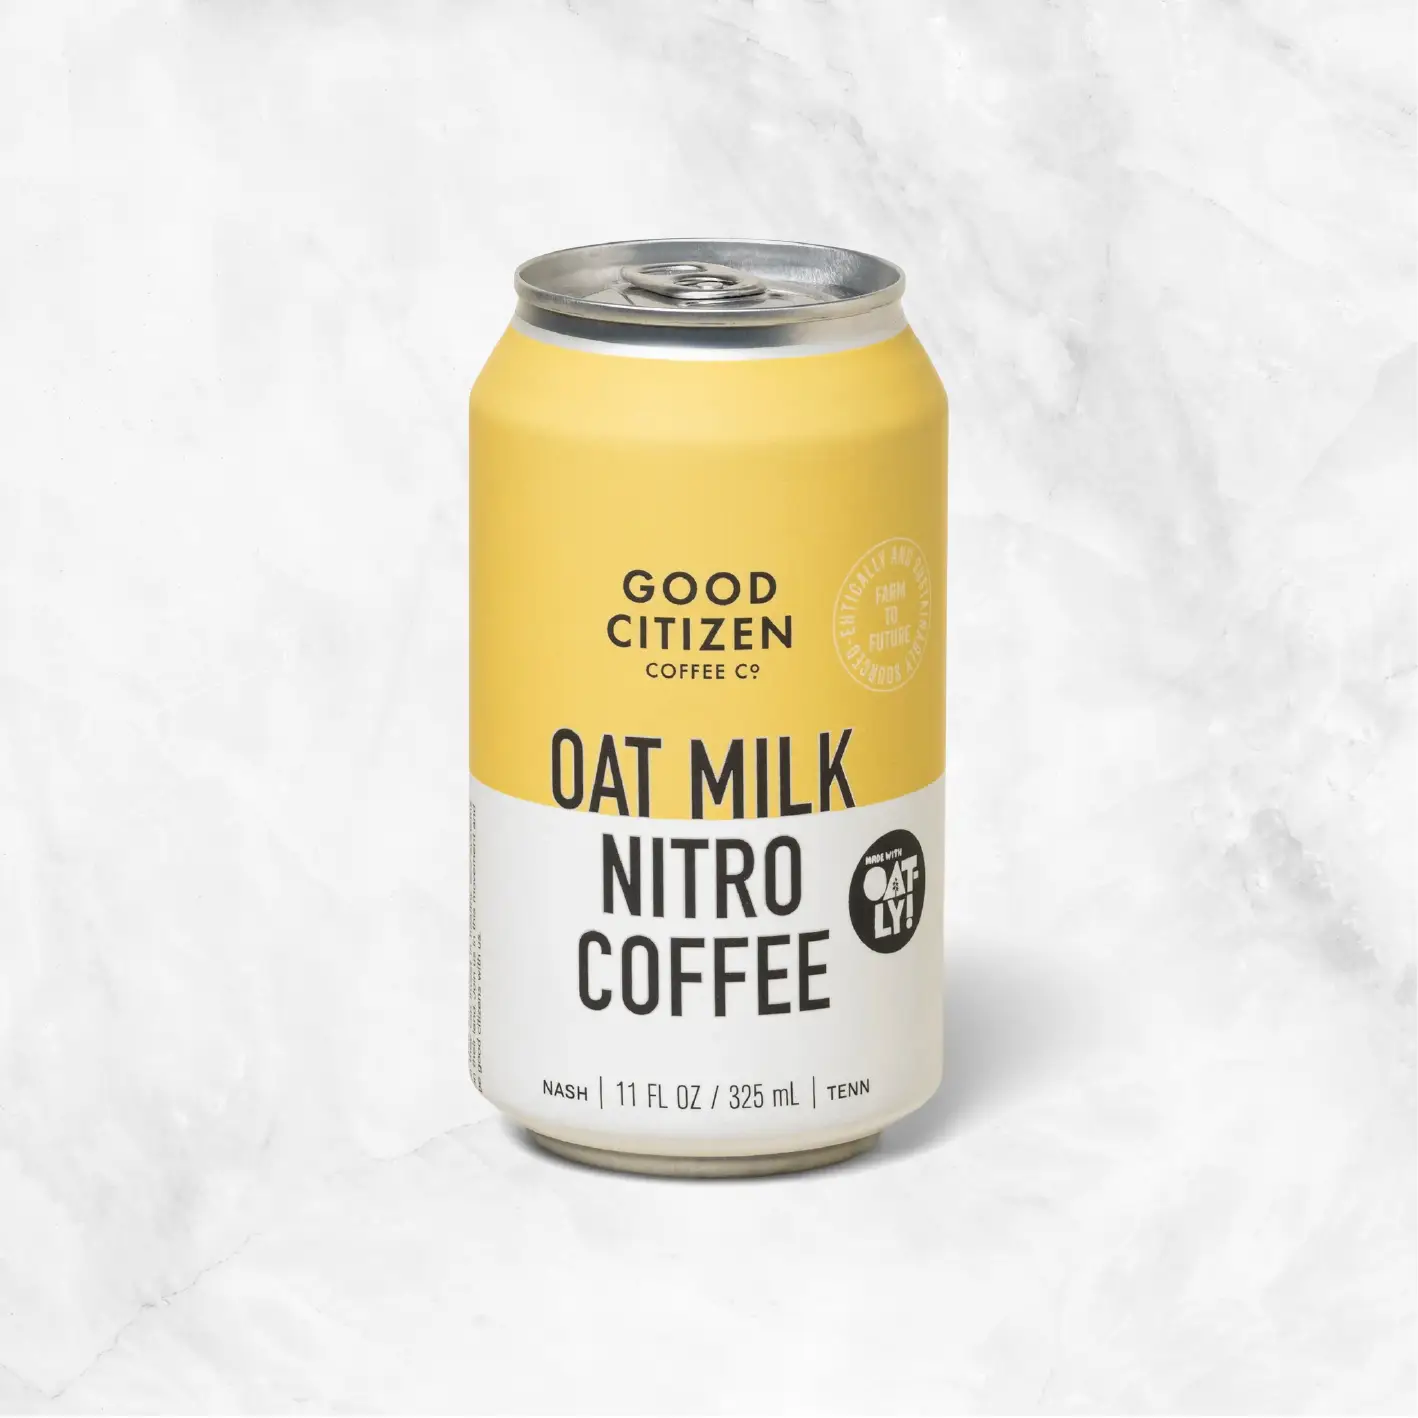 Oat Milk Nitro Coffee Cans